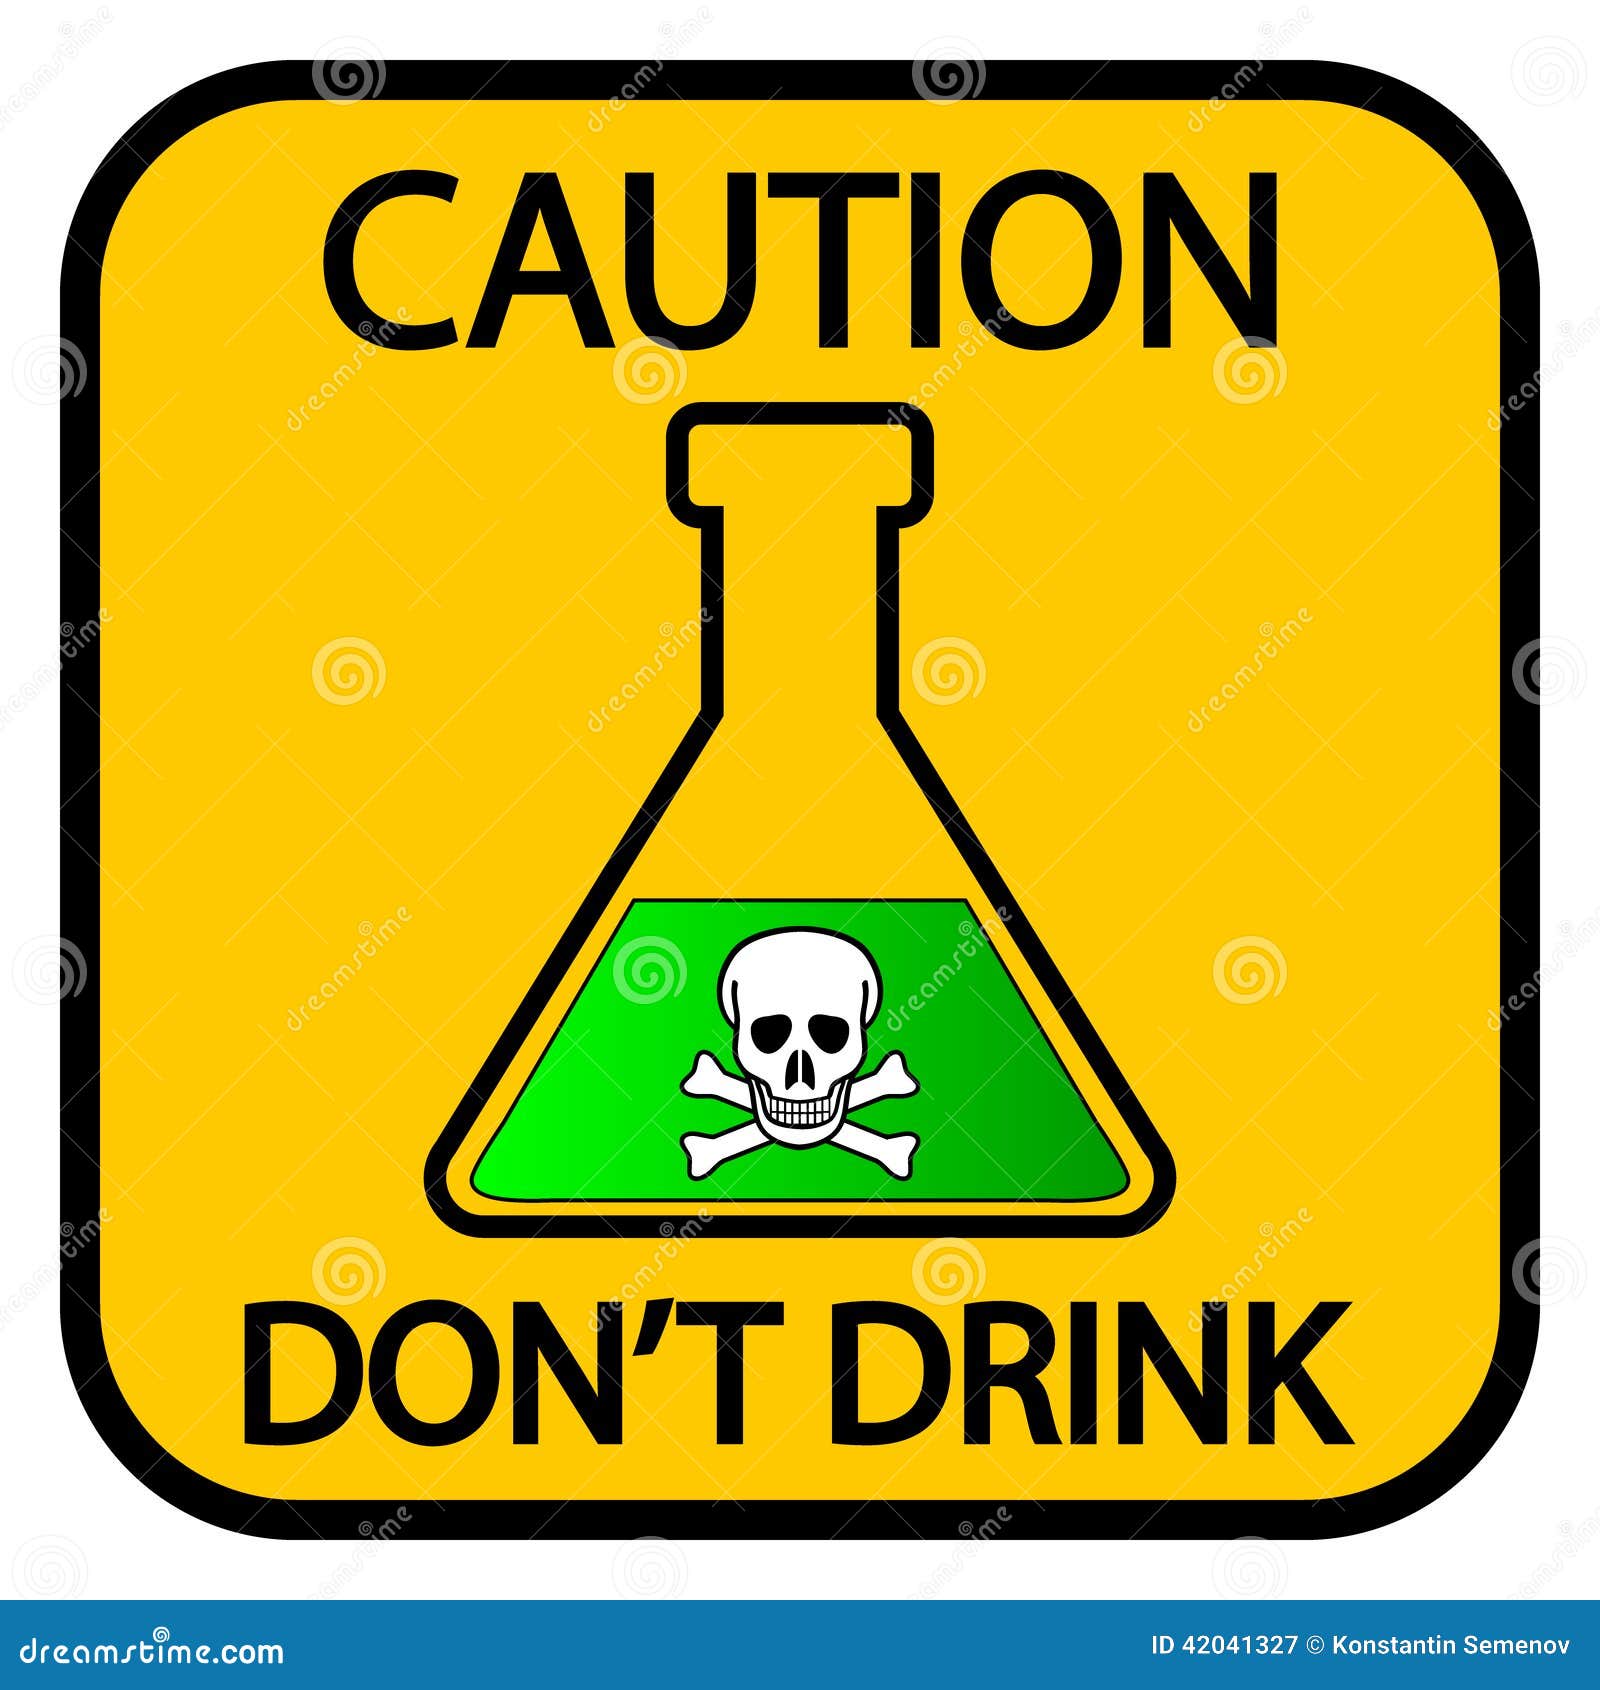  Danger  chemicals sign  stock vector Illustration of 